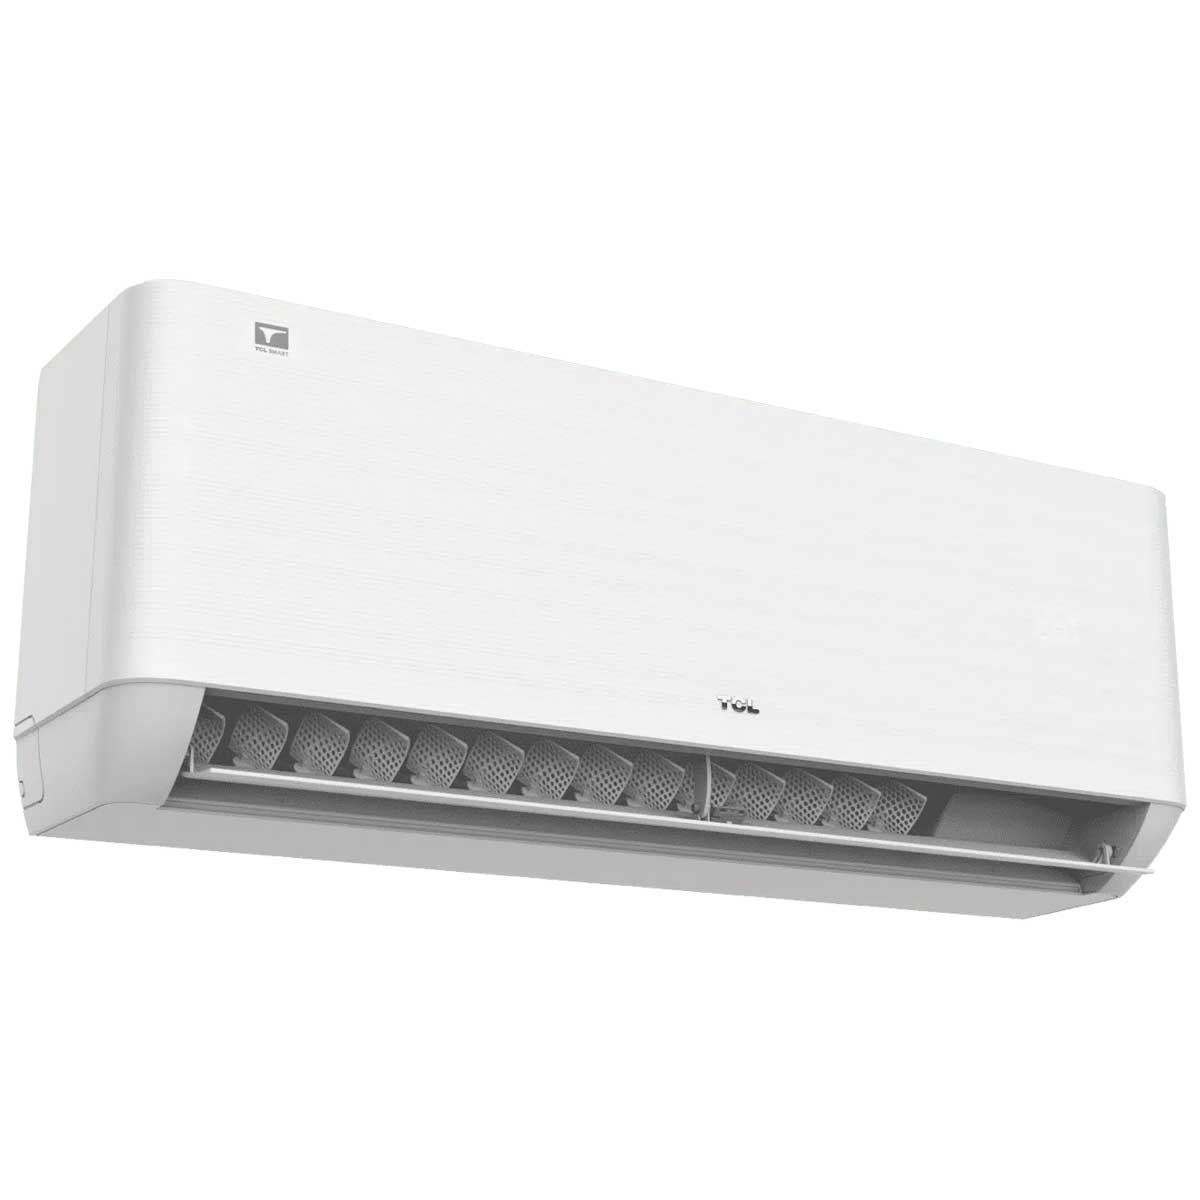 TCL TAC-12CHSD/TPG31 1.5匹 Wi-Fi 智能變頻冷暖 掛牆分體式冷氣機 - ShineCreation 創暉百貨